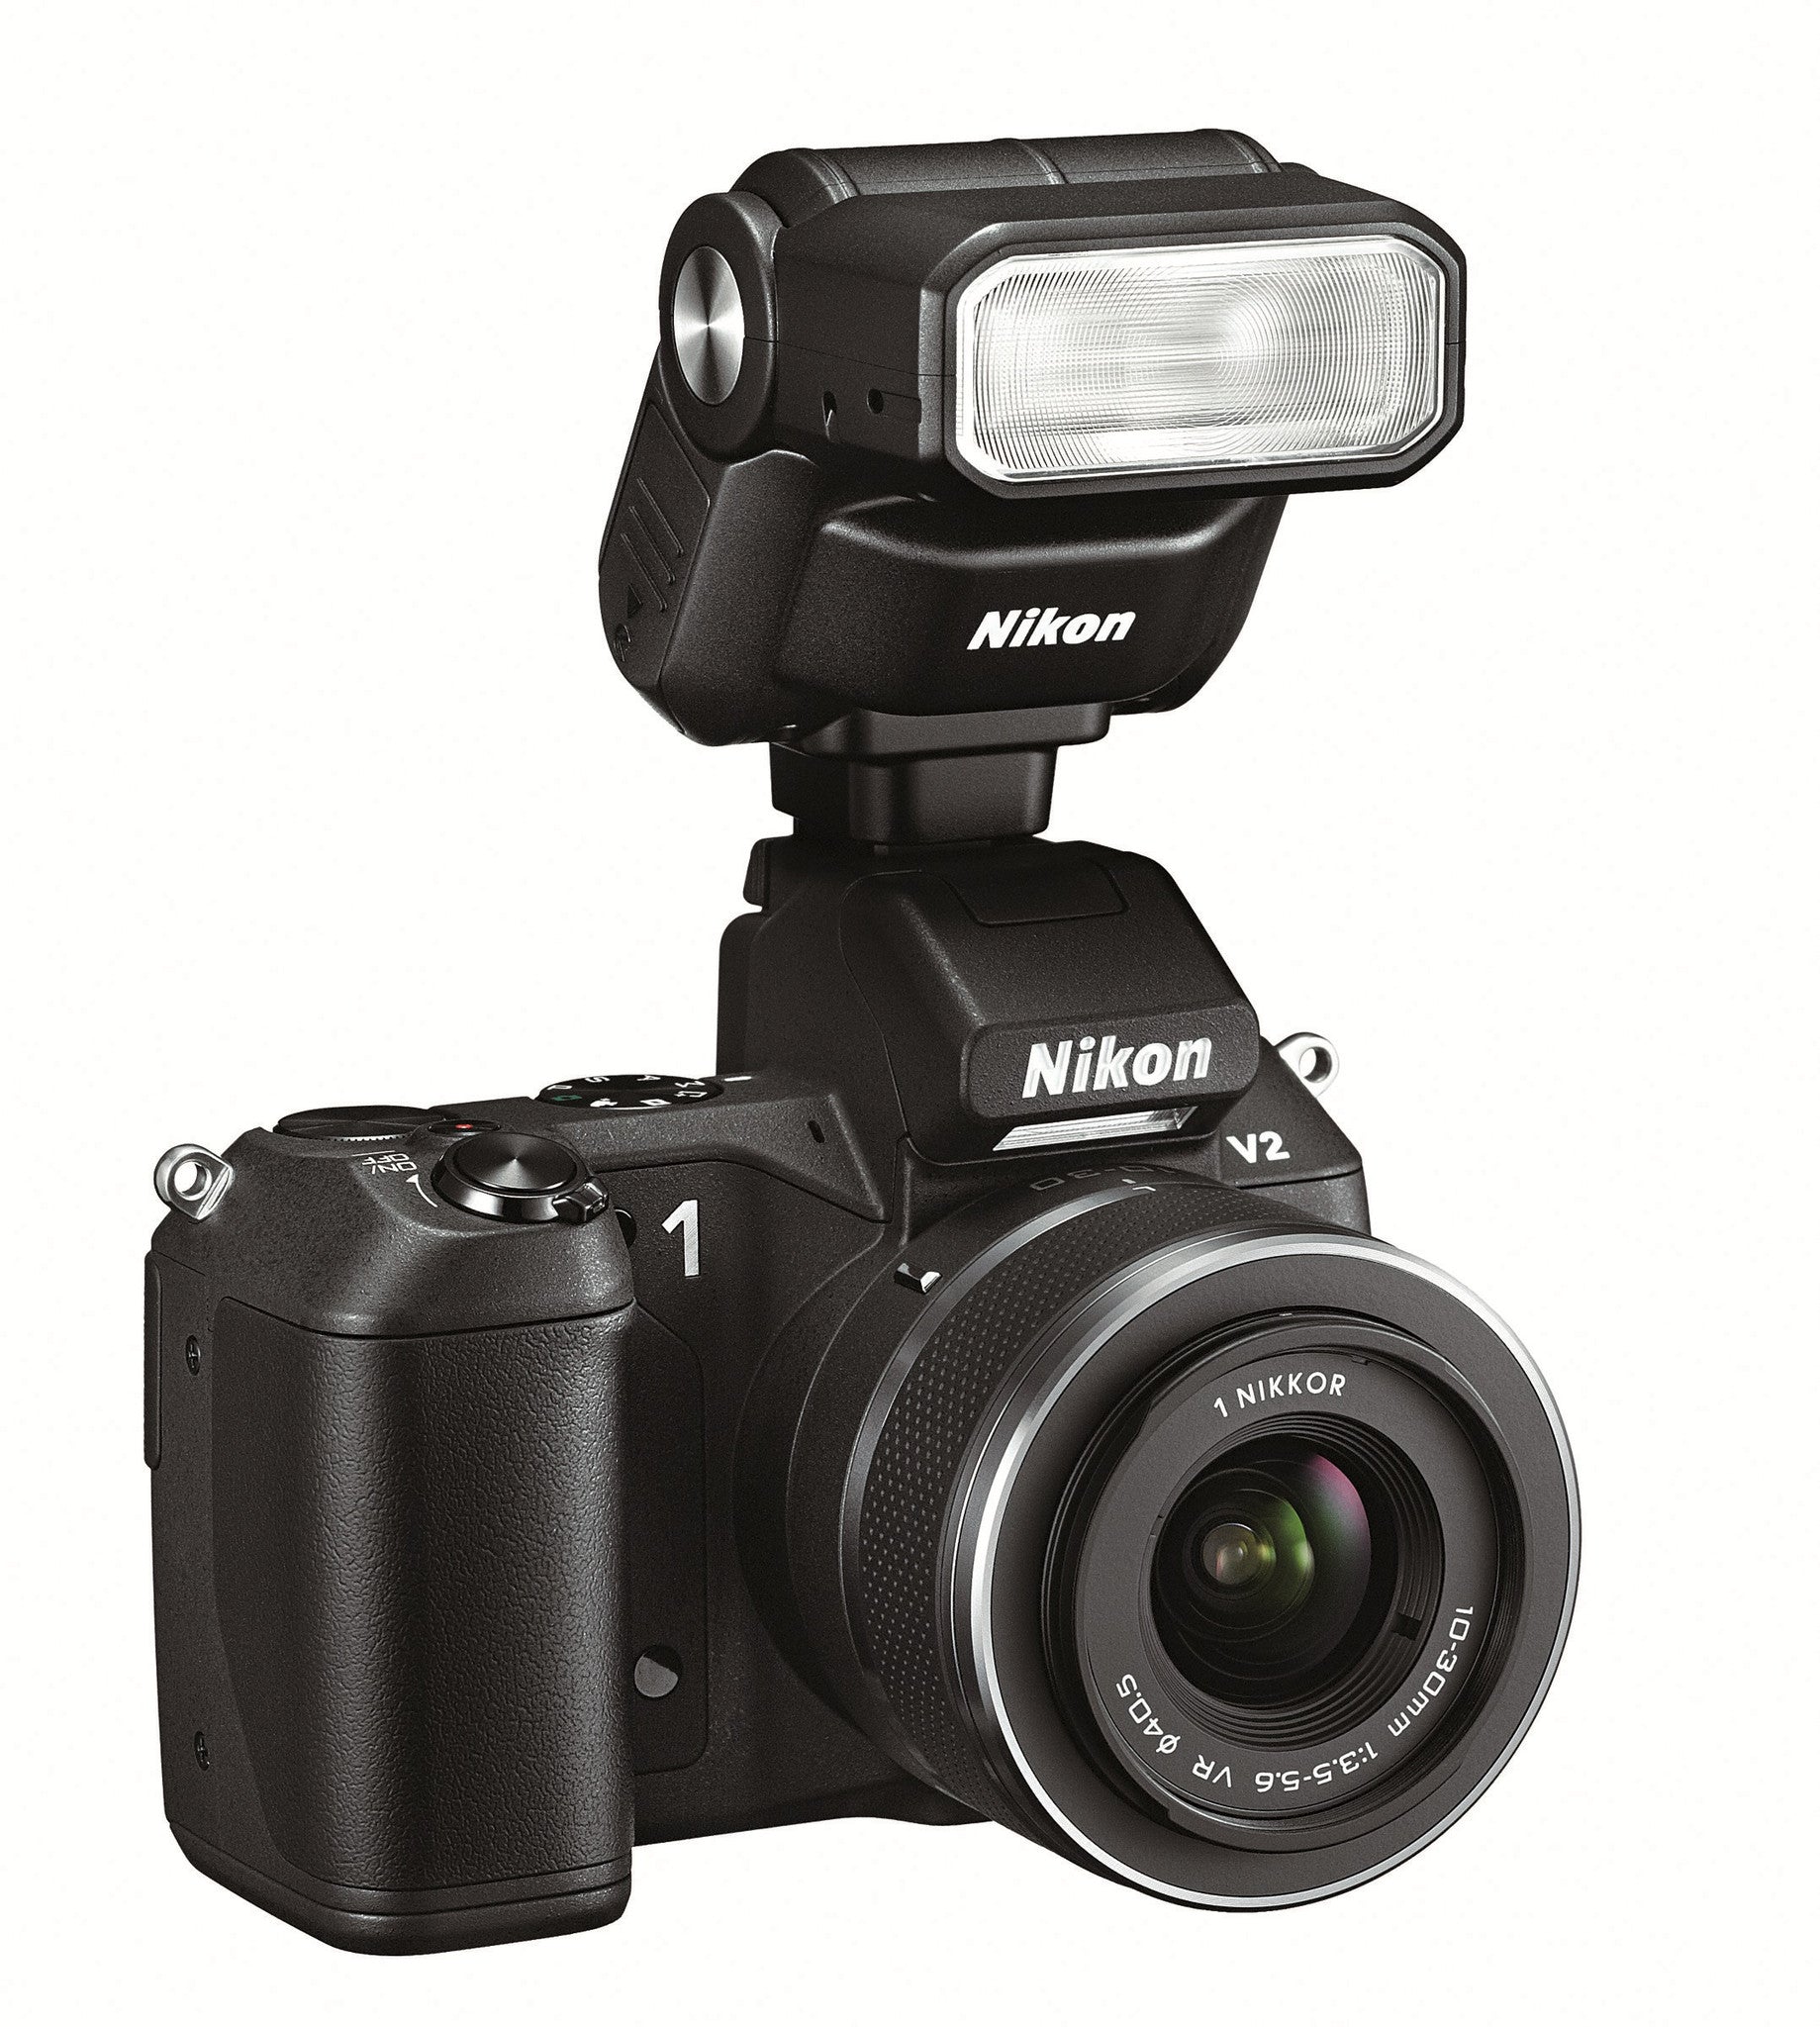 Nikon SB-N7 Speedlight Black, lighting hot shoe flashes, Nikon - Pictureline  - 2